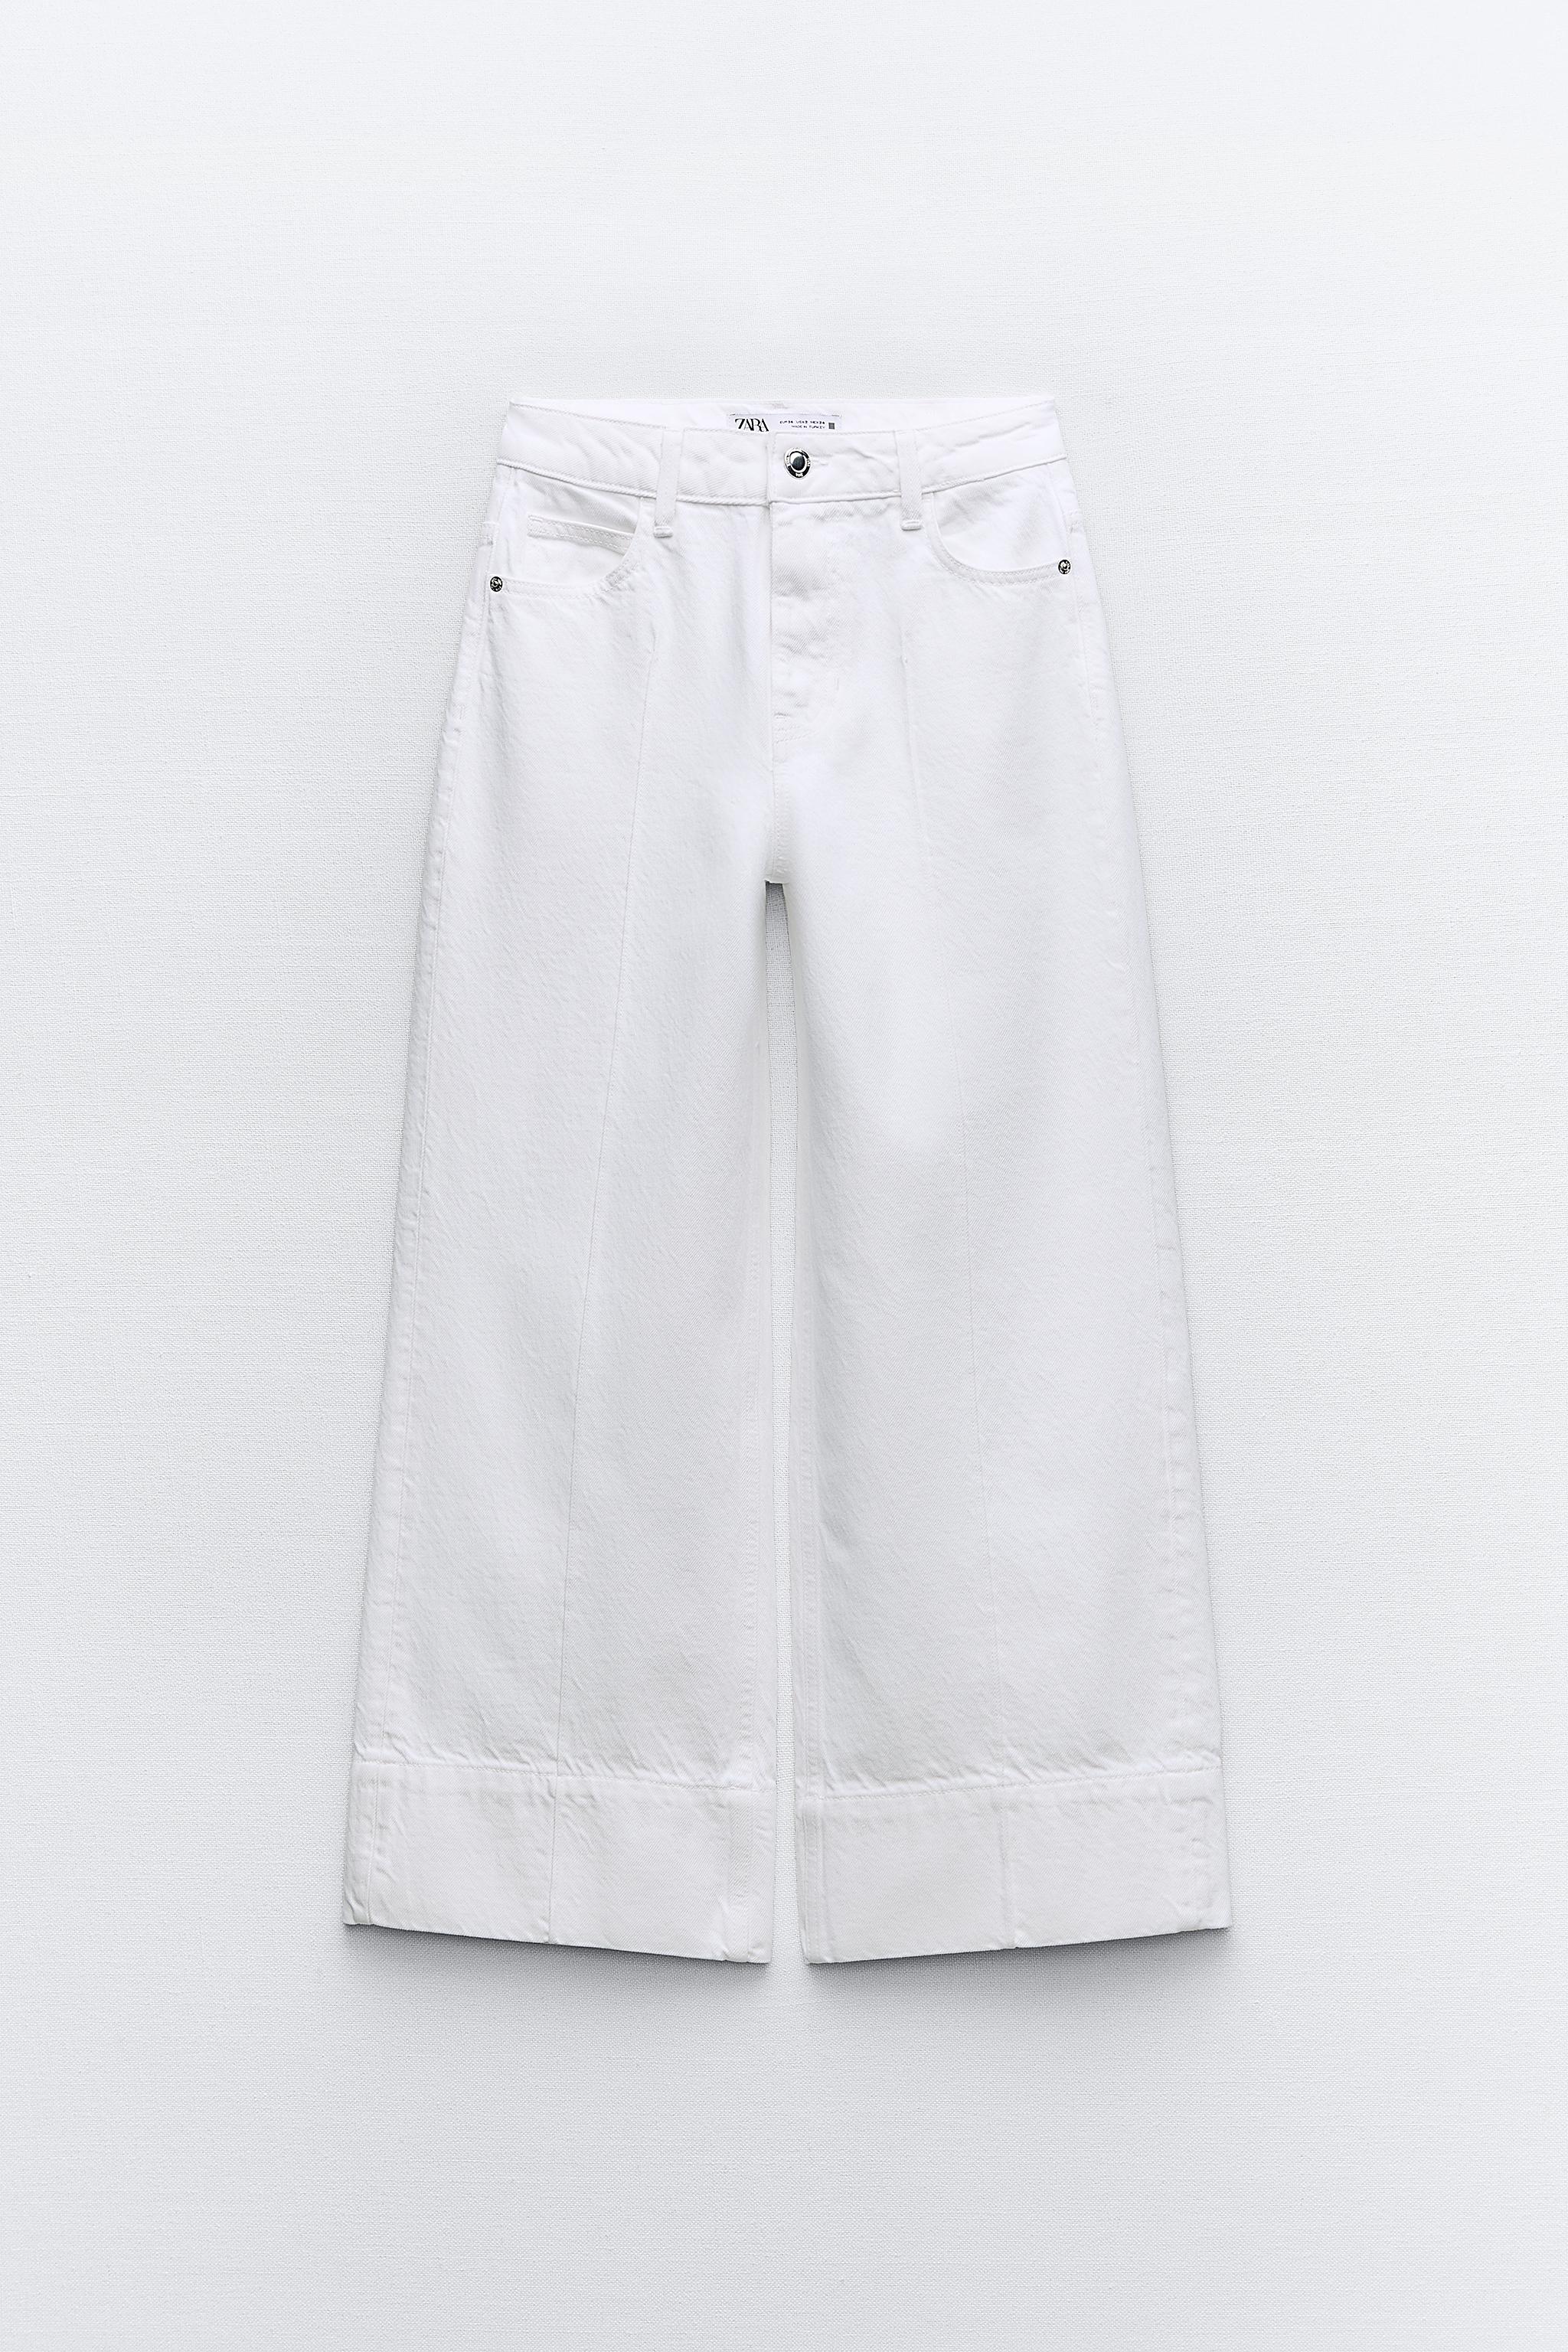 Baggy jeans , my tiny waist ft cute crop tops 🩶✨ Top : @veras_closet_sa  Jeans : @zara Sunnies : @loewe